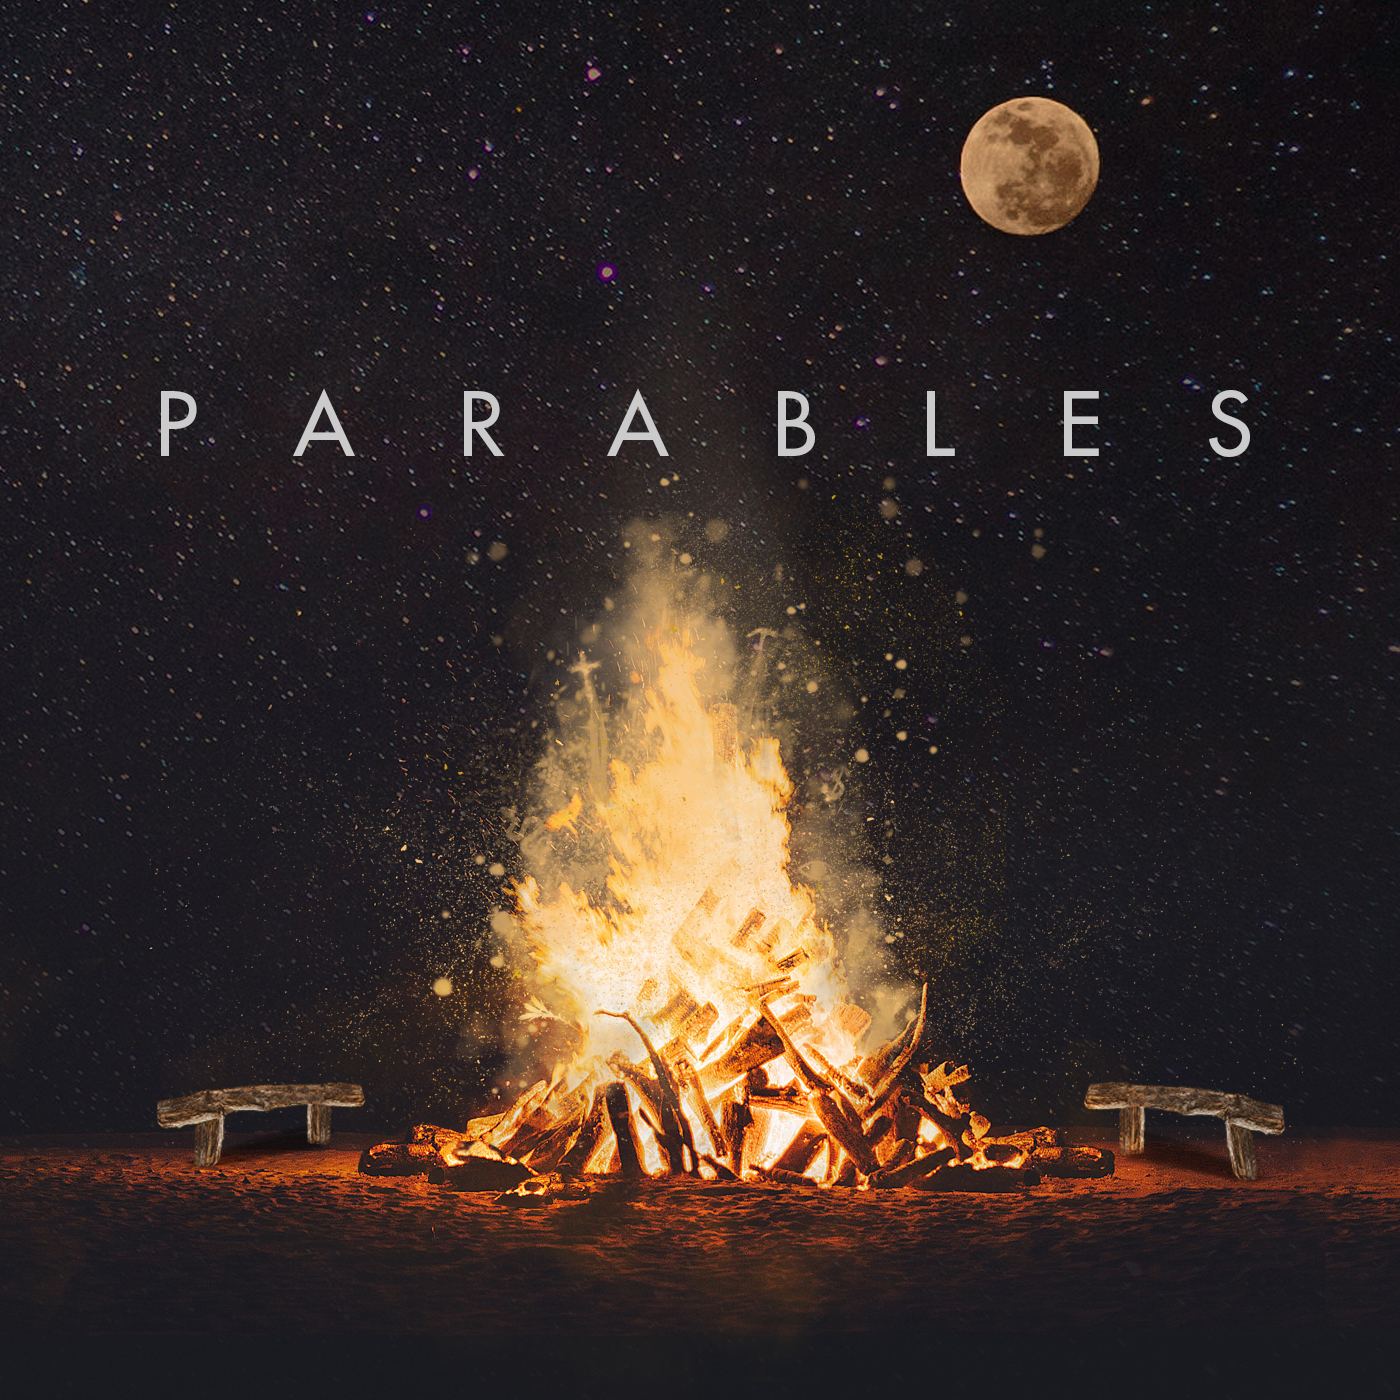 Parables - The 10 Mina - Chris Wall - 10-20-2019